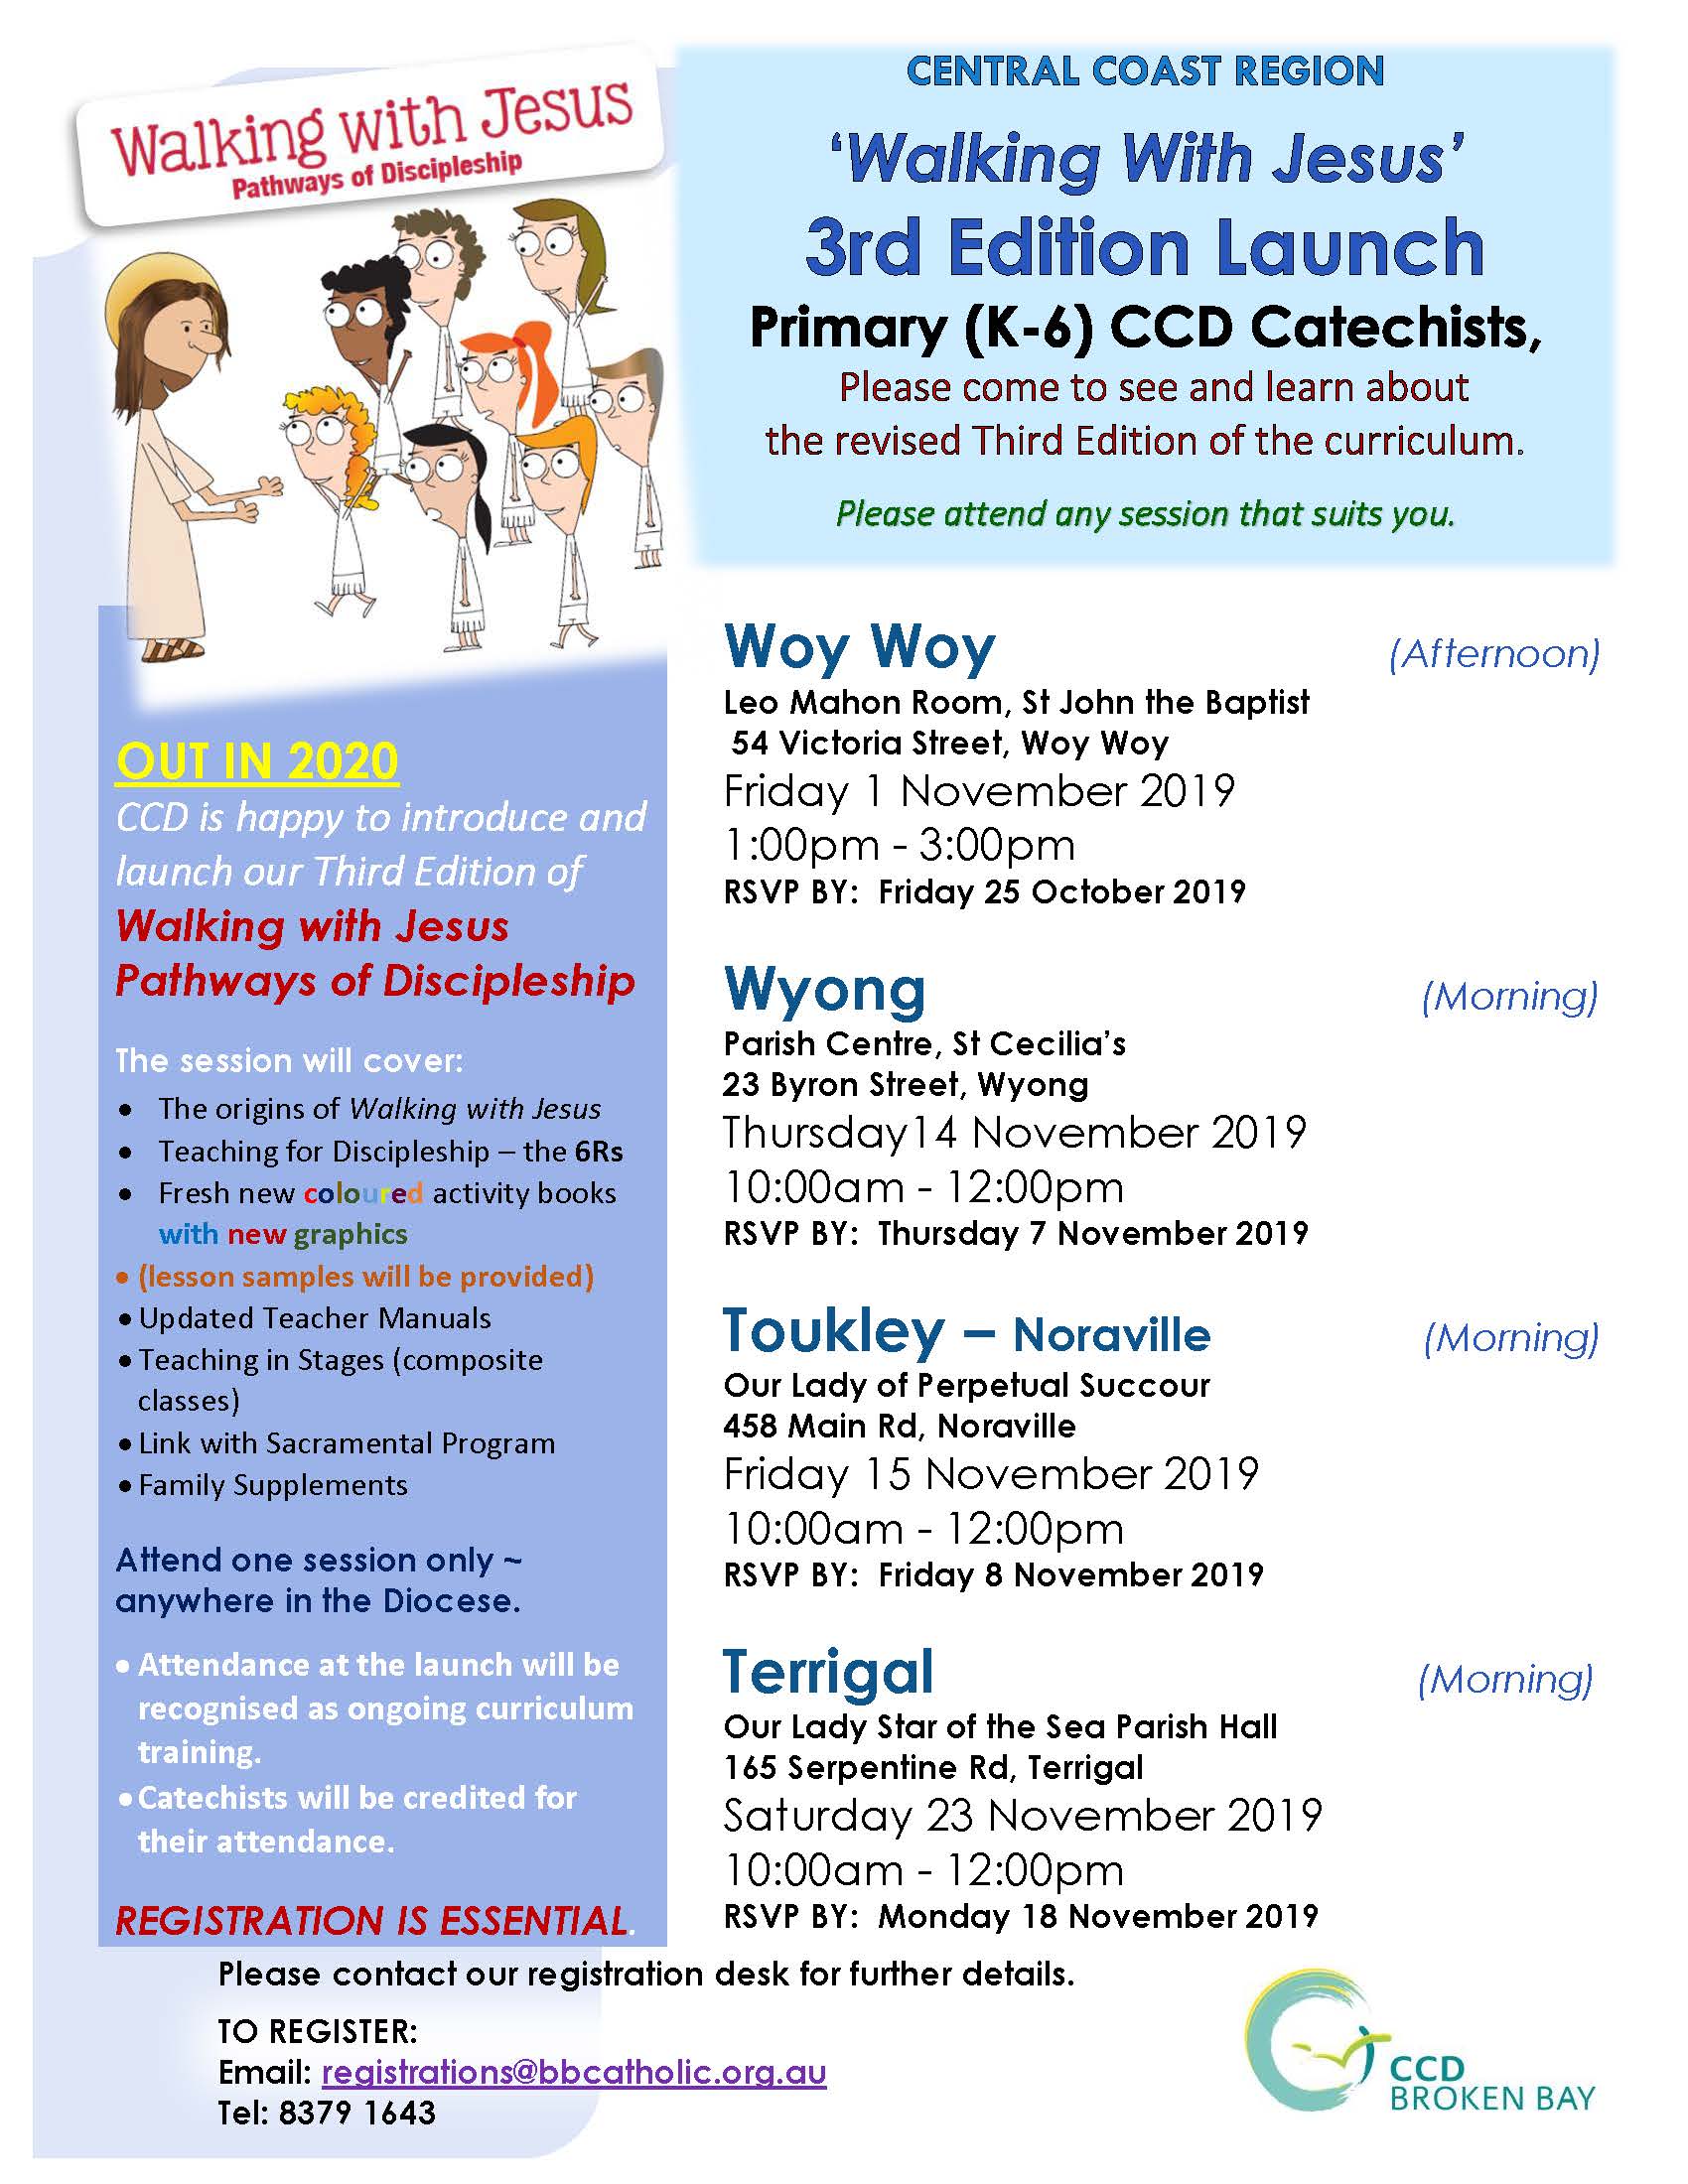 CC 3rd Edition Curriculum Training Launch Dates Nov 19